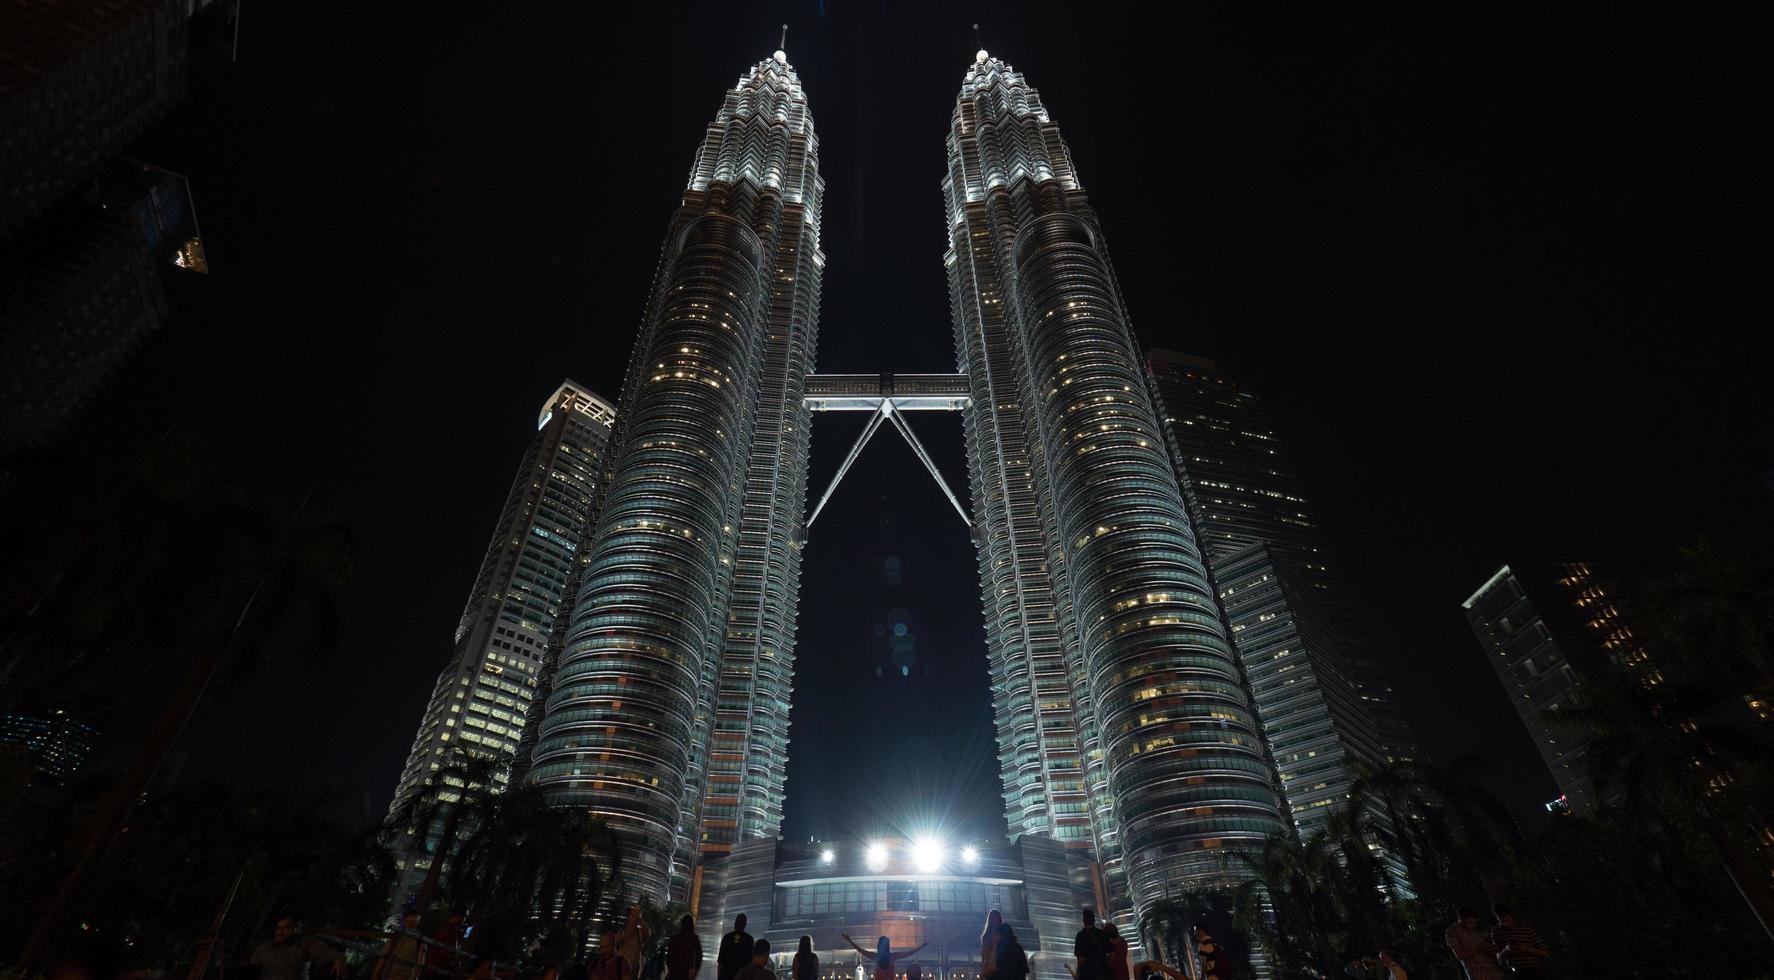 kuala lumpur, malasia, 2020 - vista nocturna de las torres gemelas petronas foto